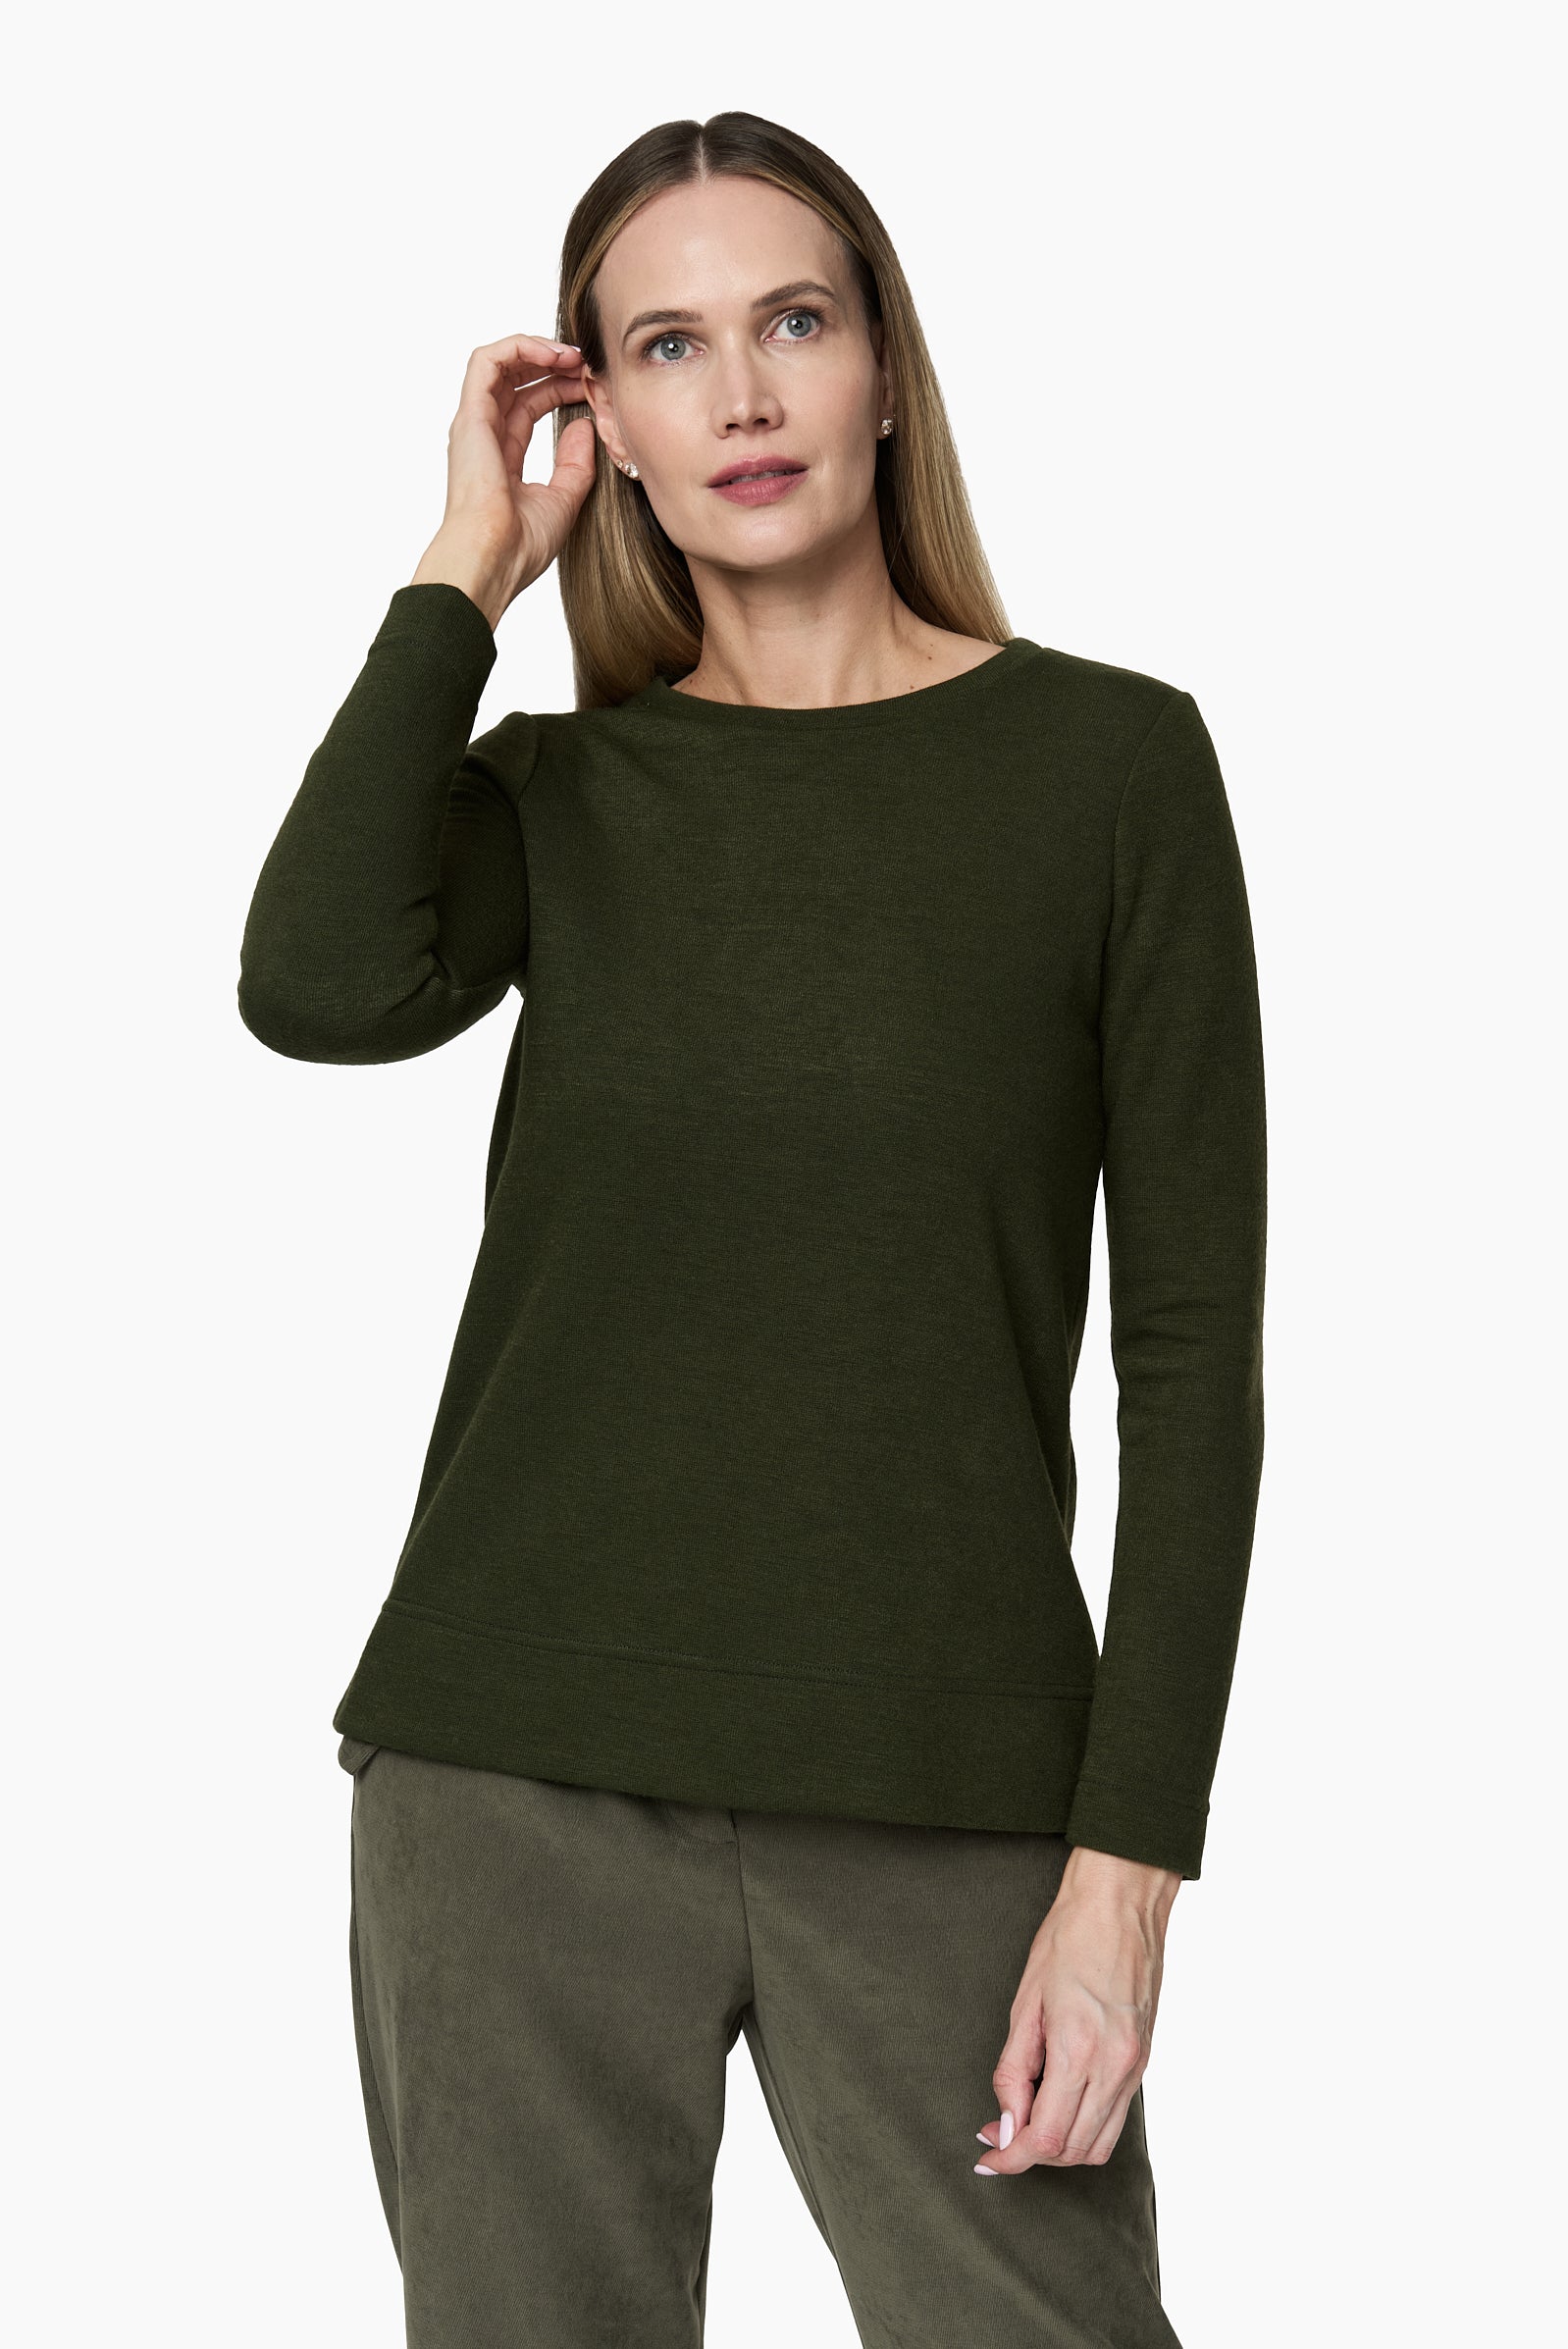 Sweater Básico Verde Militar